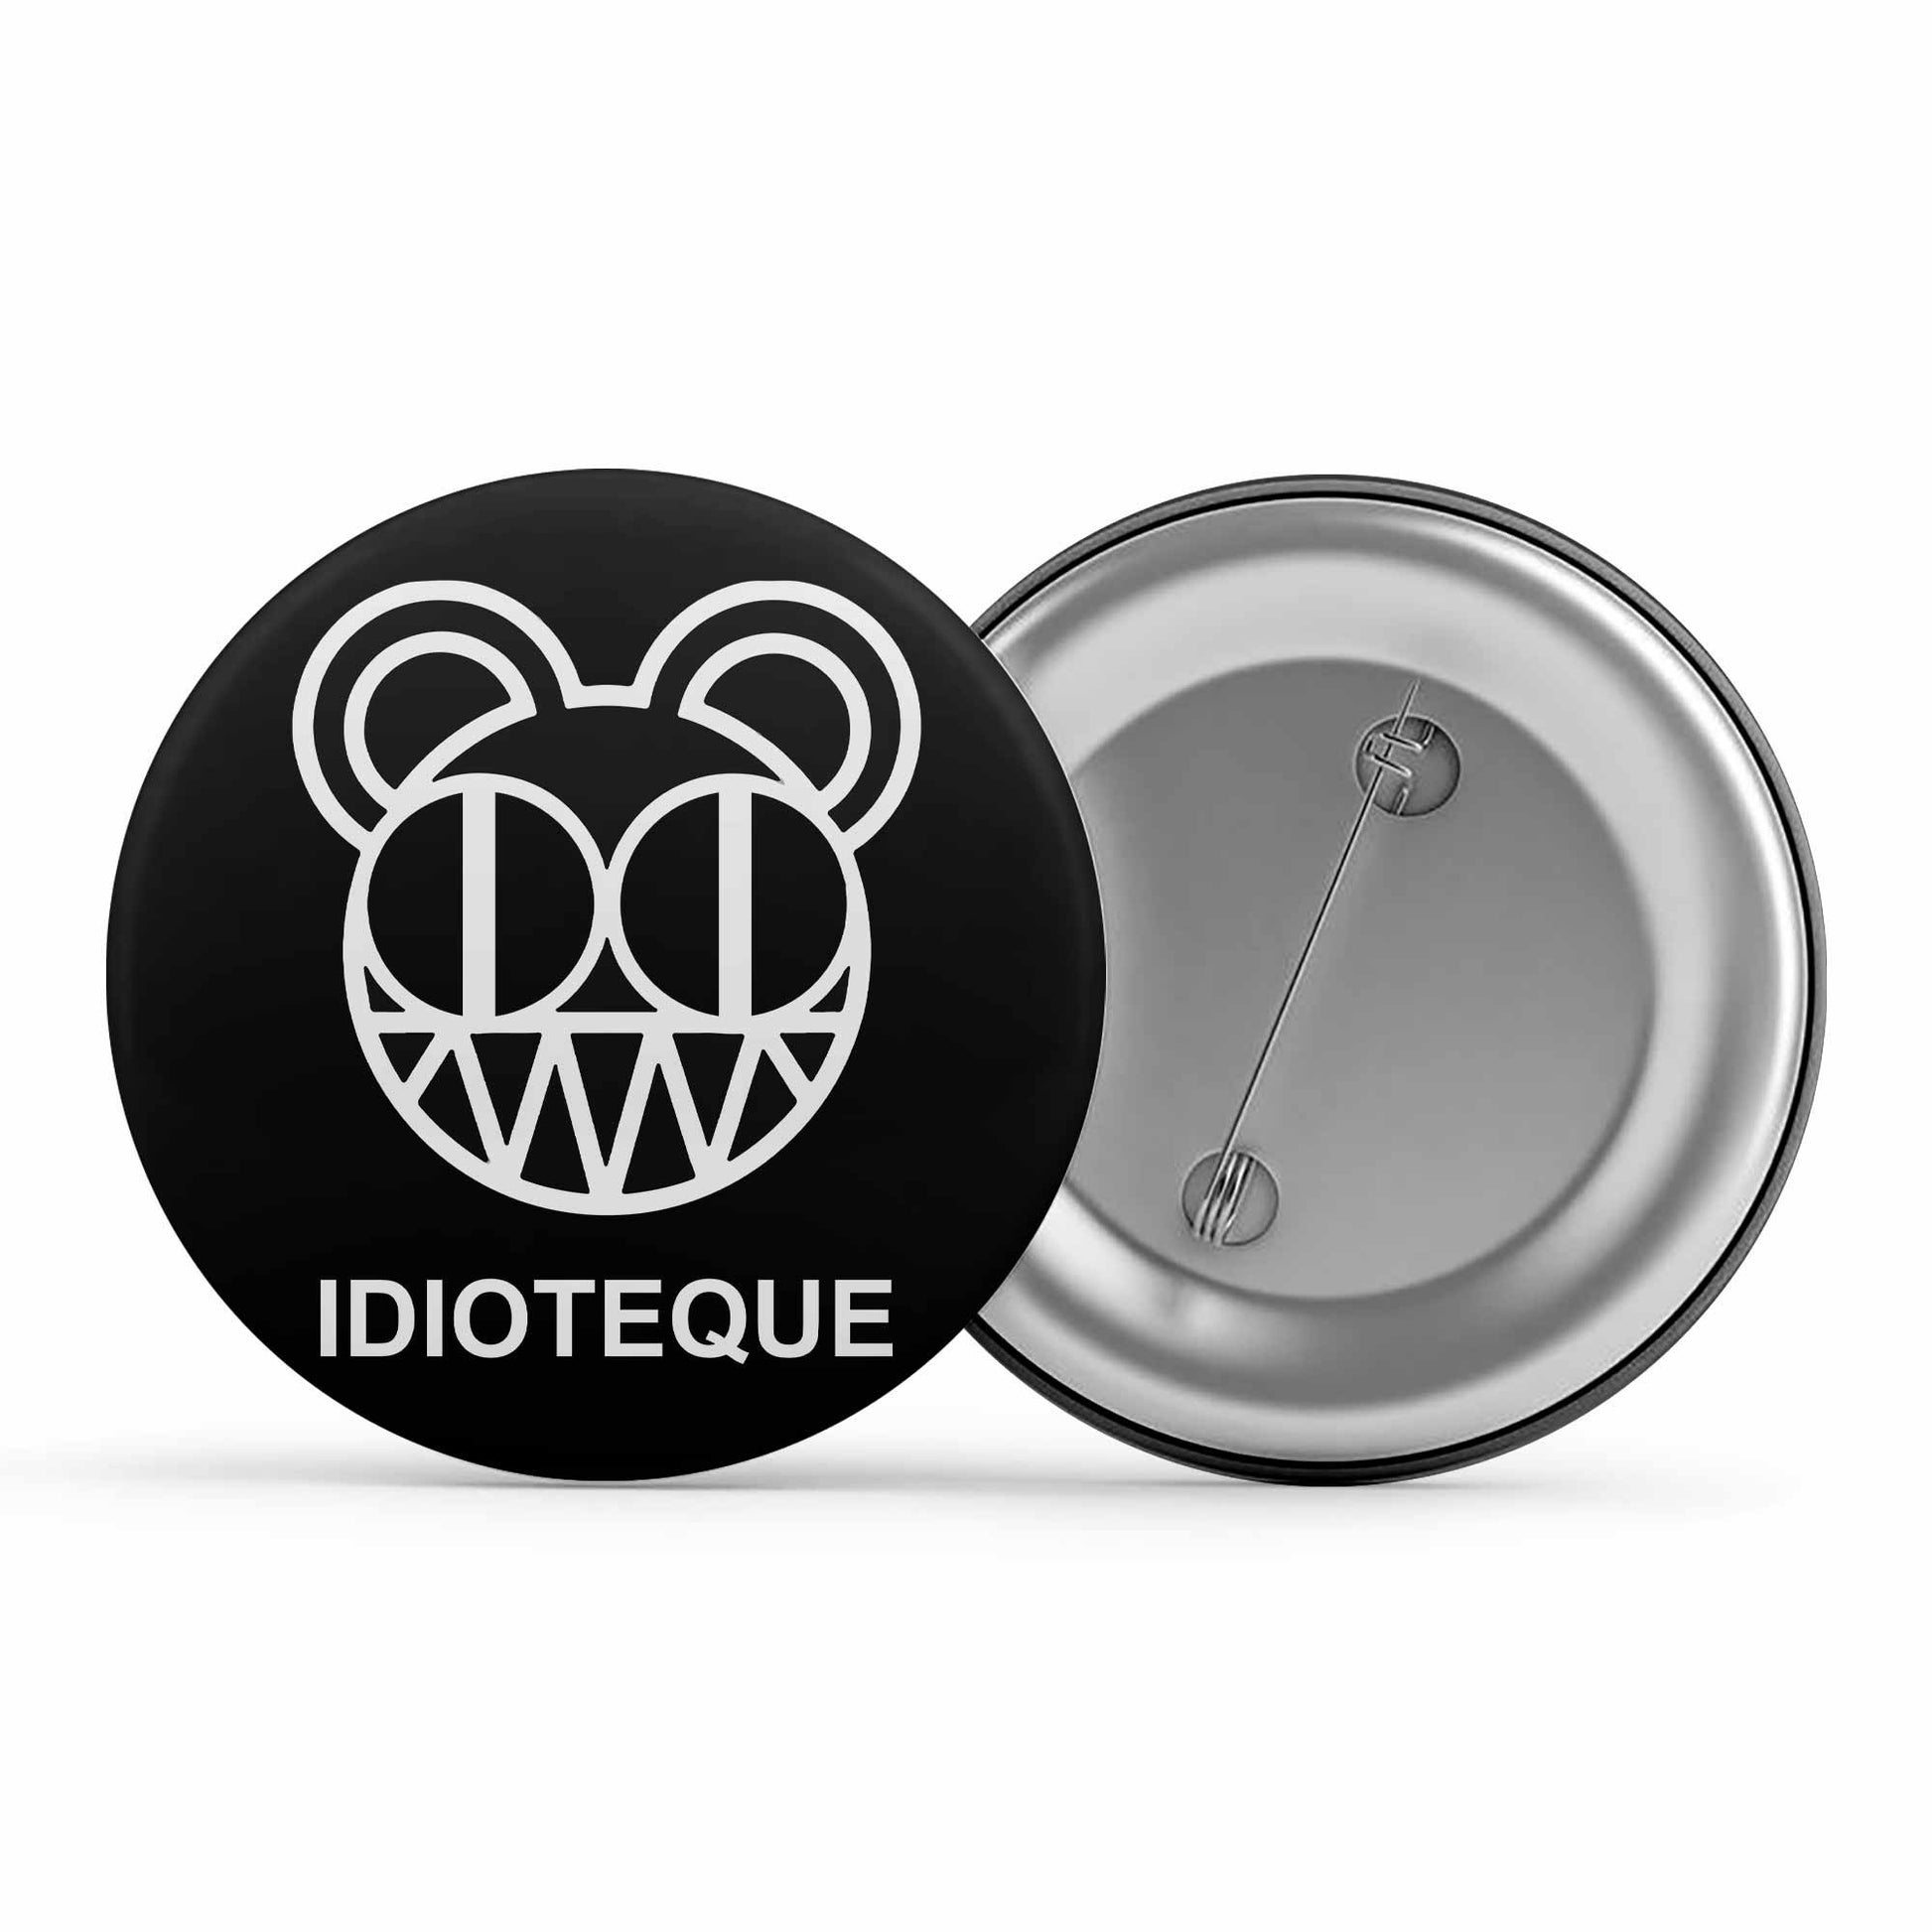 radiohead idioteque badge pin button music band buy online india the banyan tee tbt men women girls boys unisex